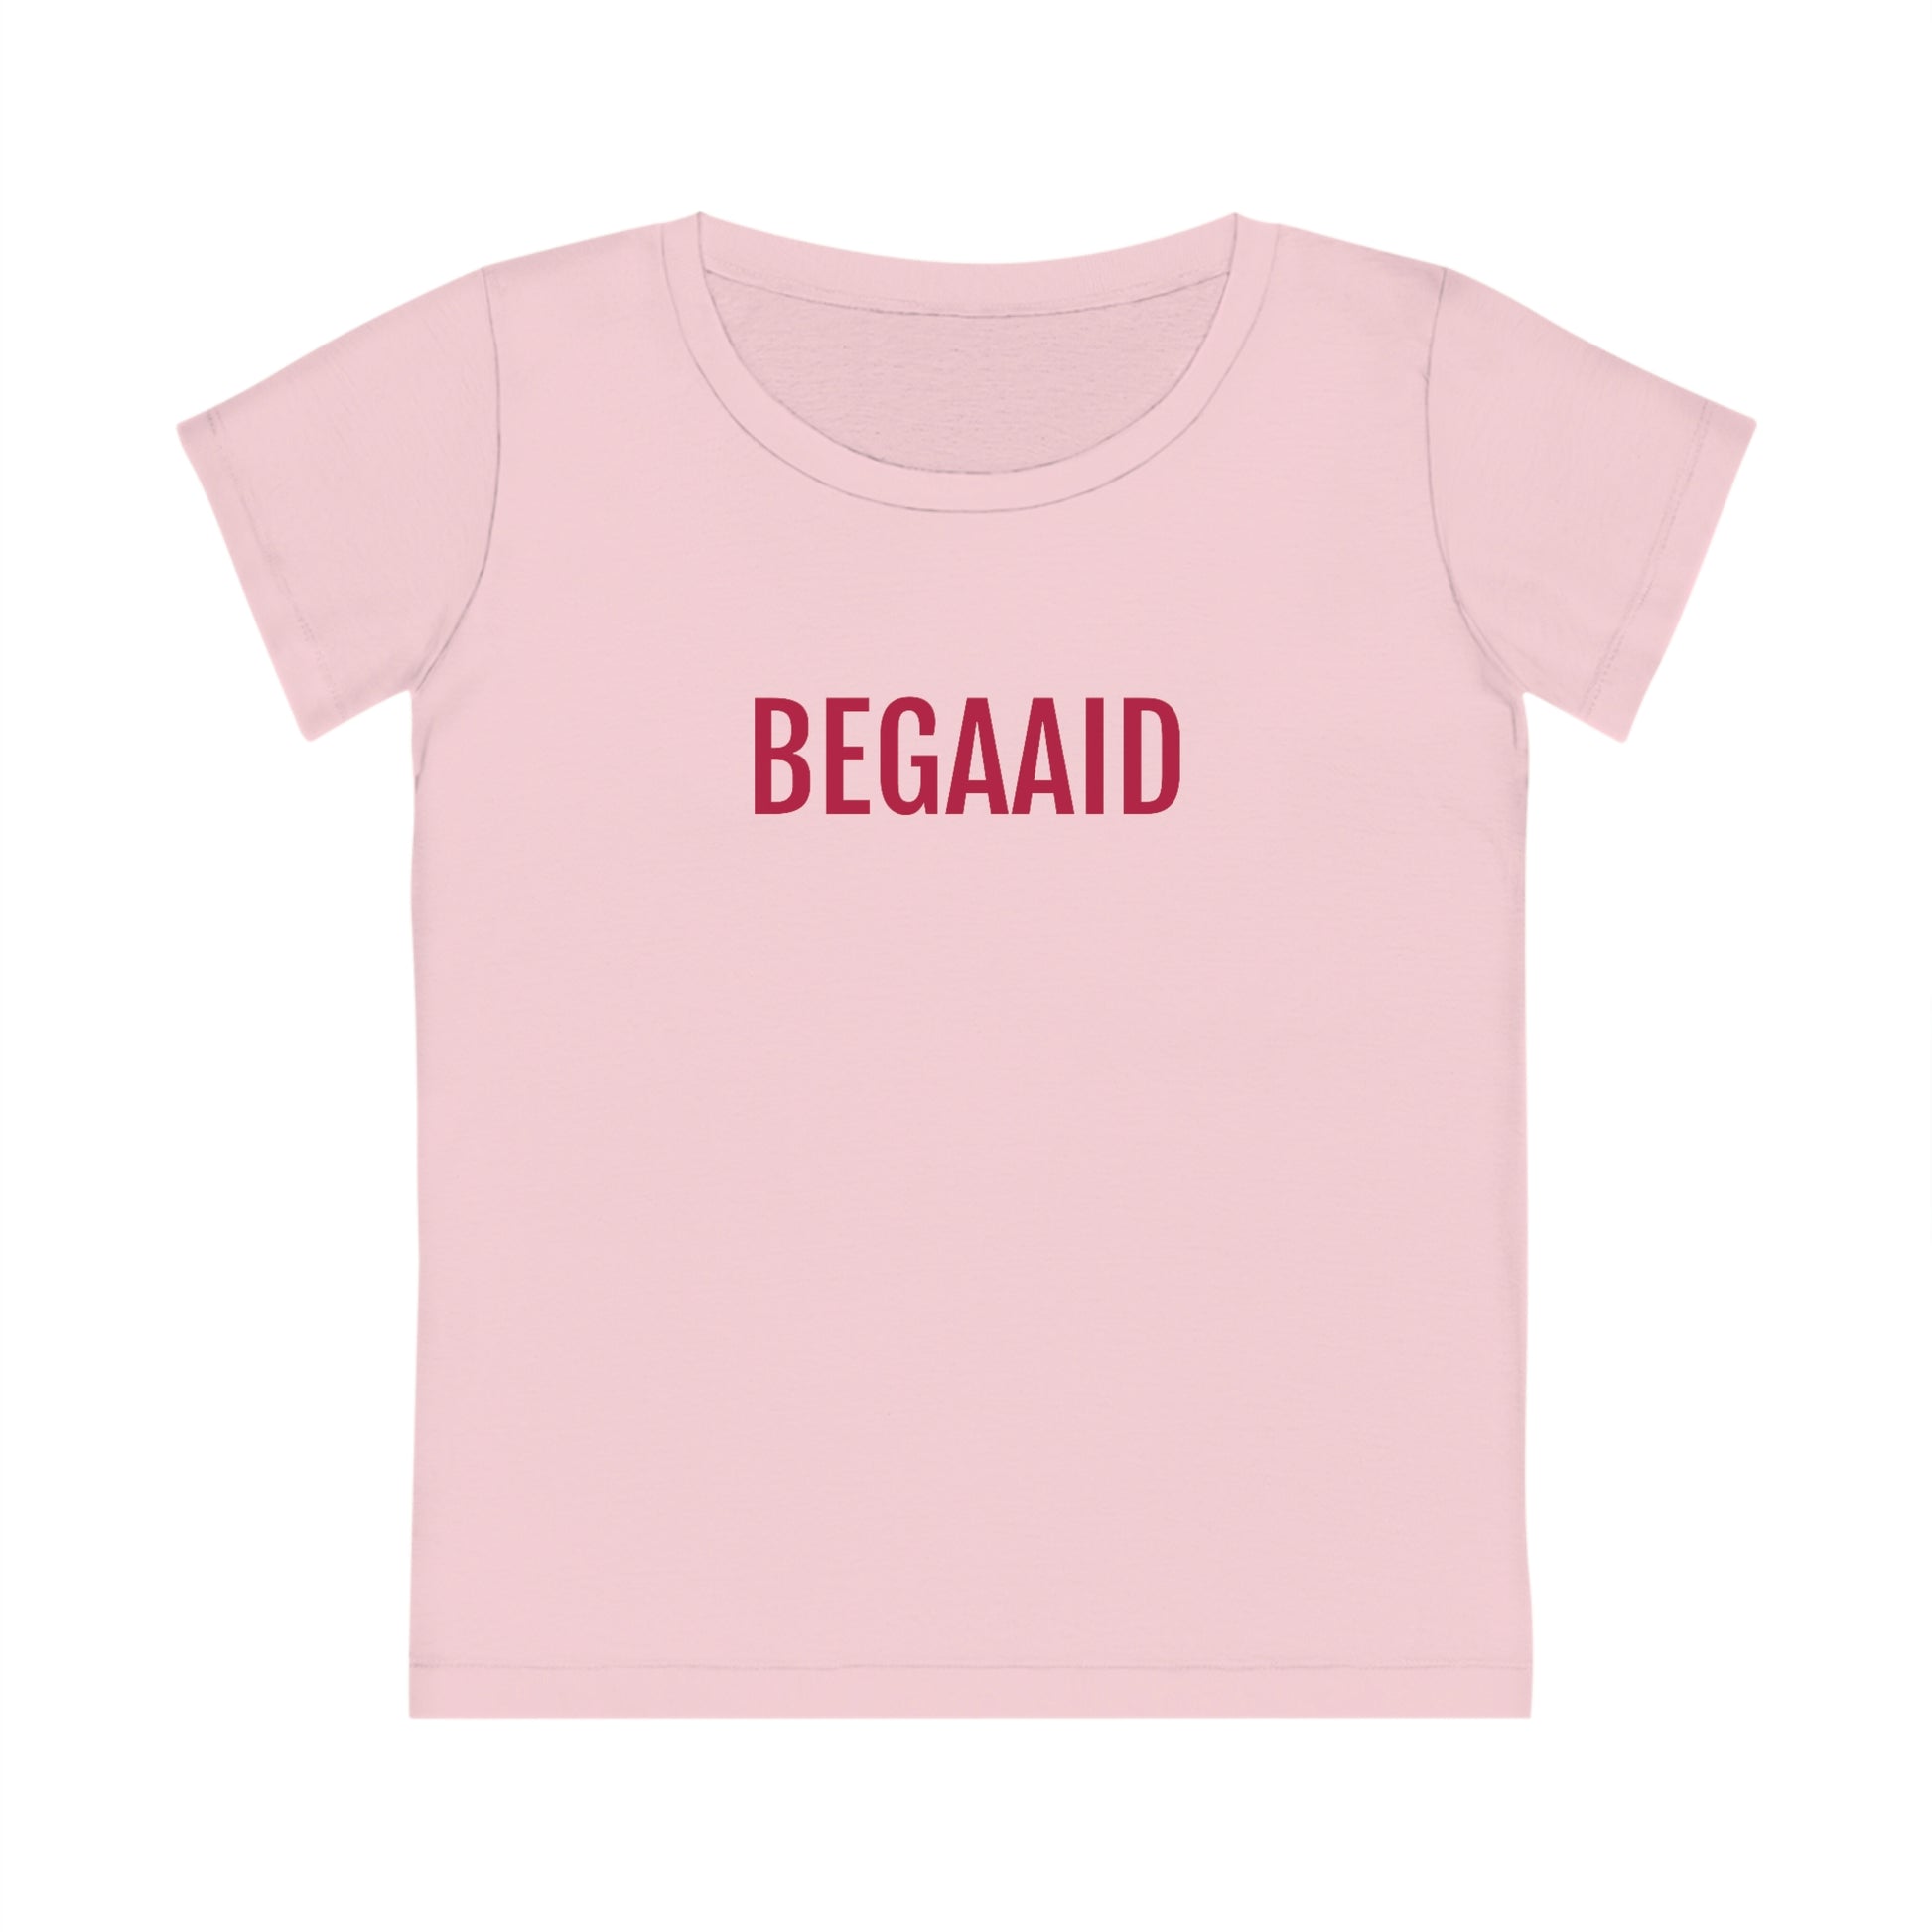 Viva magenta print op roze t-shirt - Begaaid